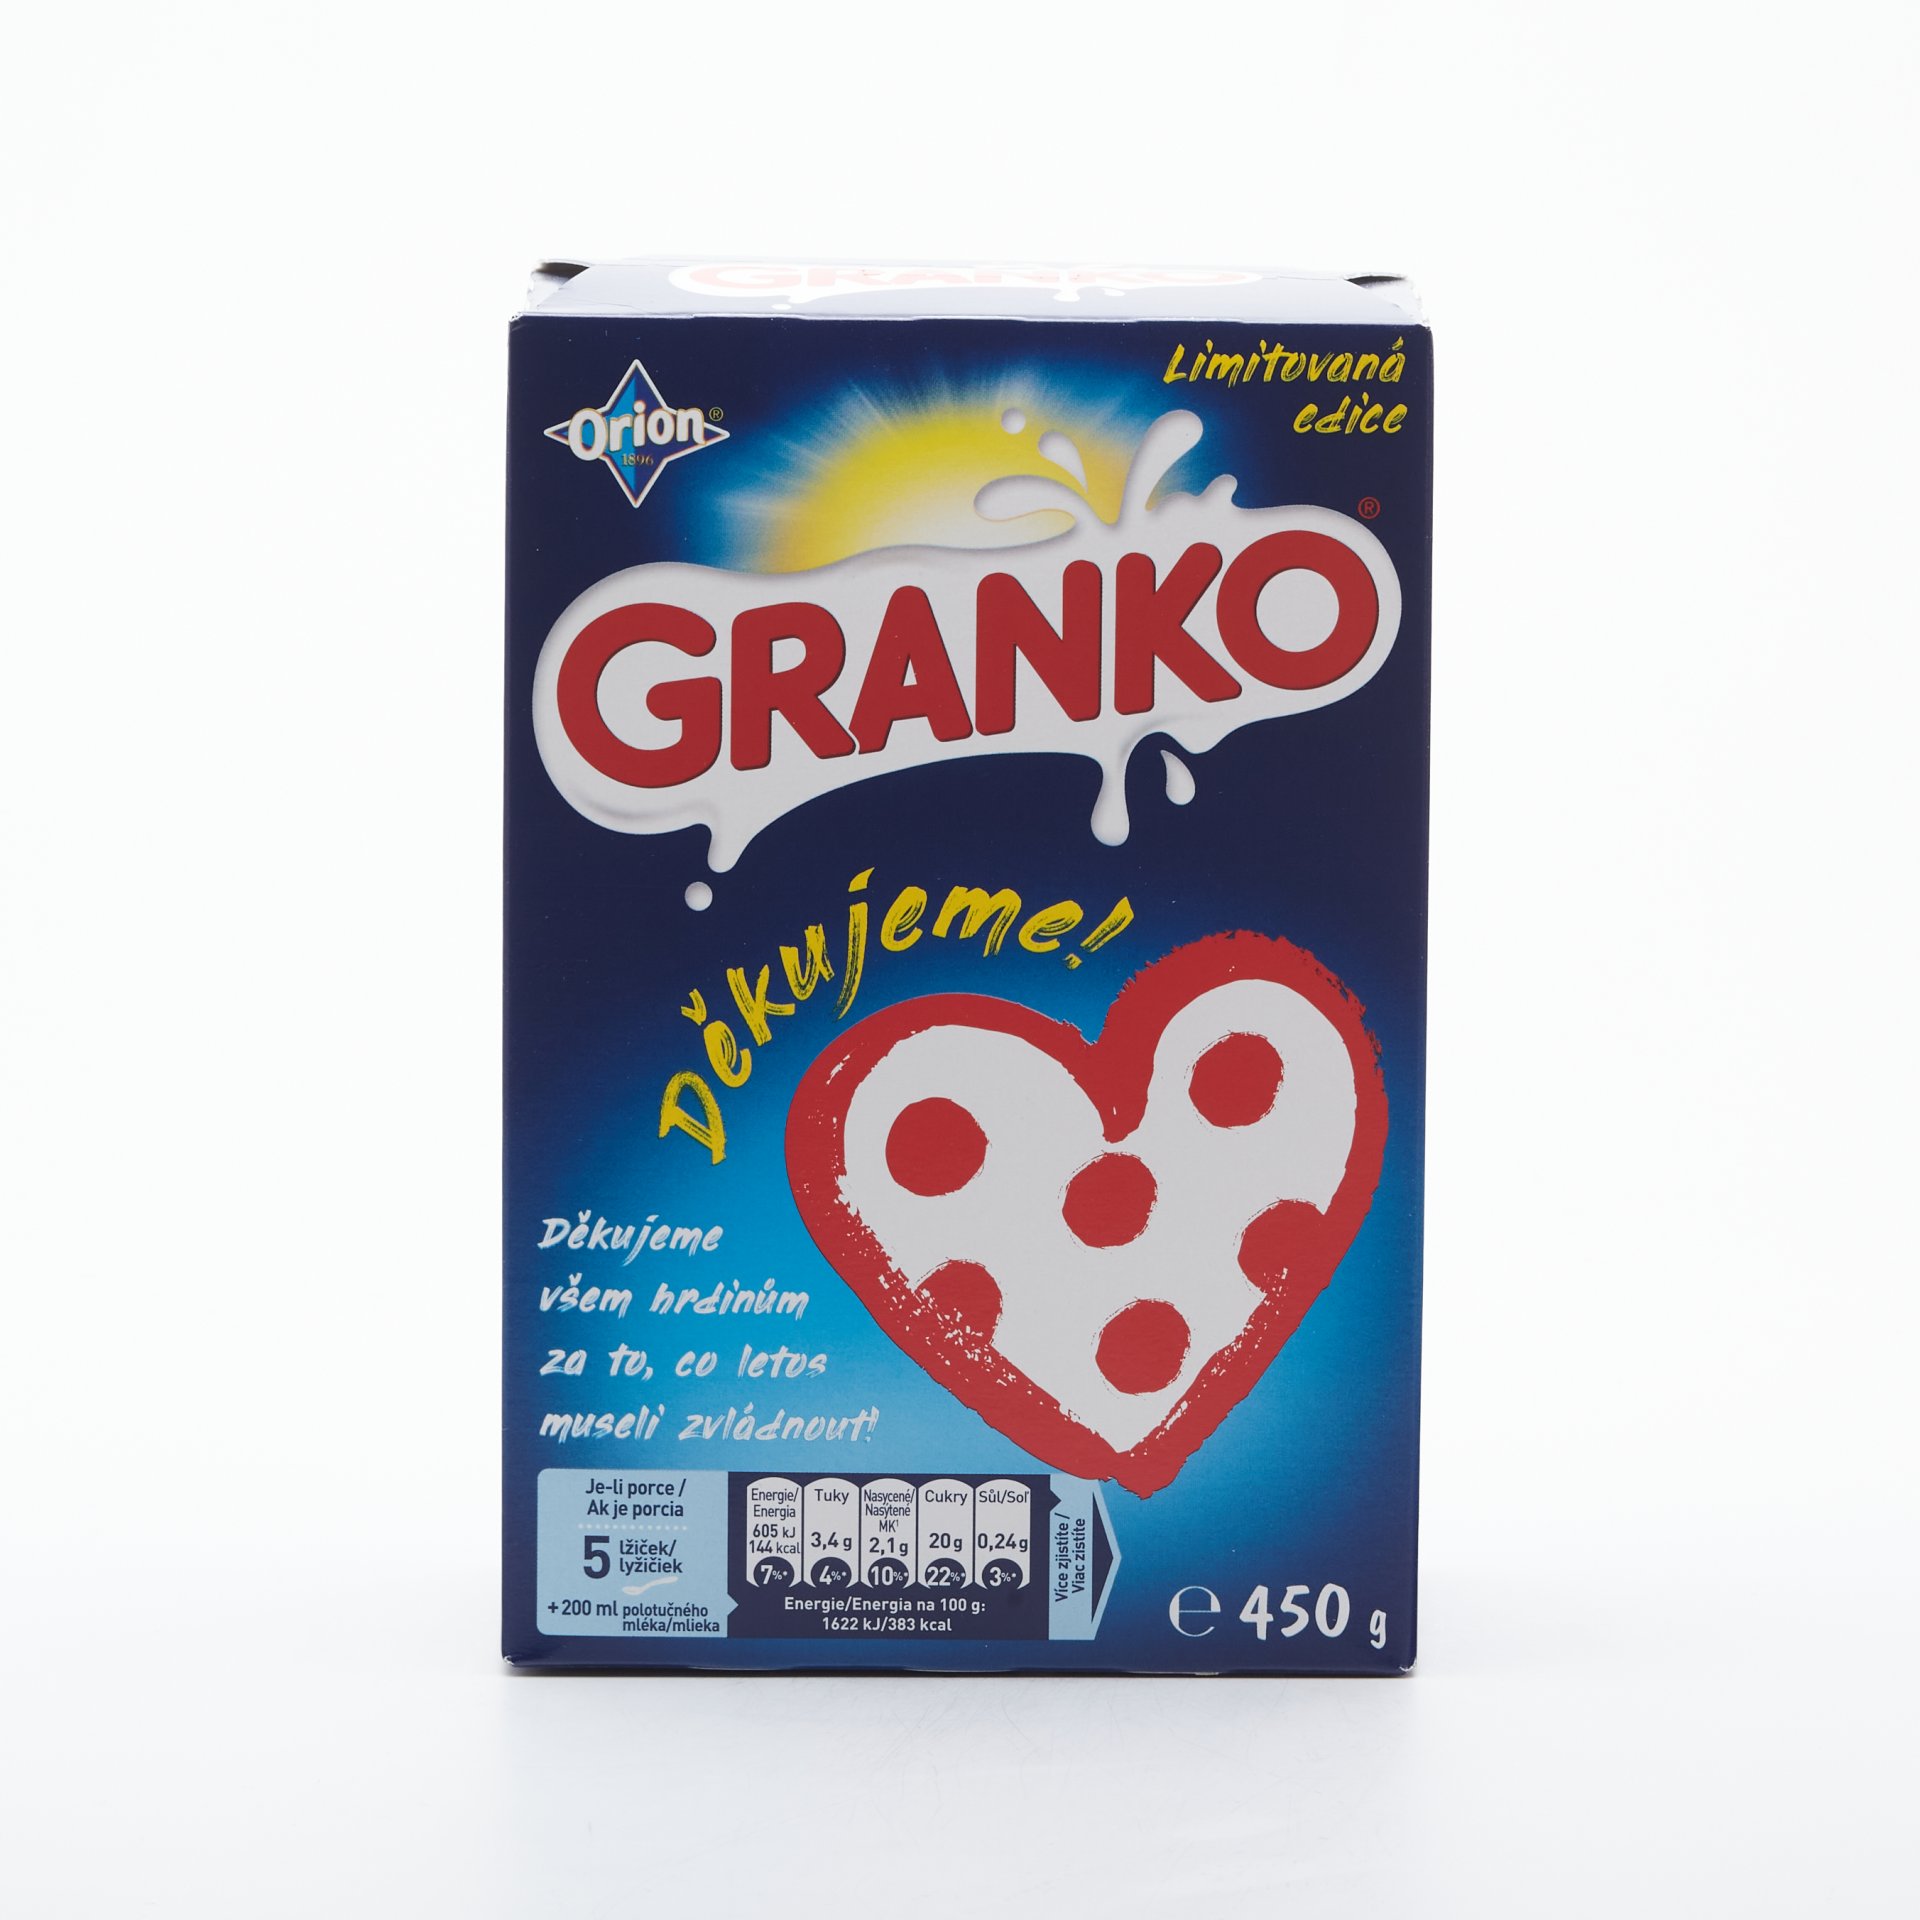 Granko box 400g